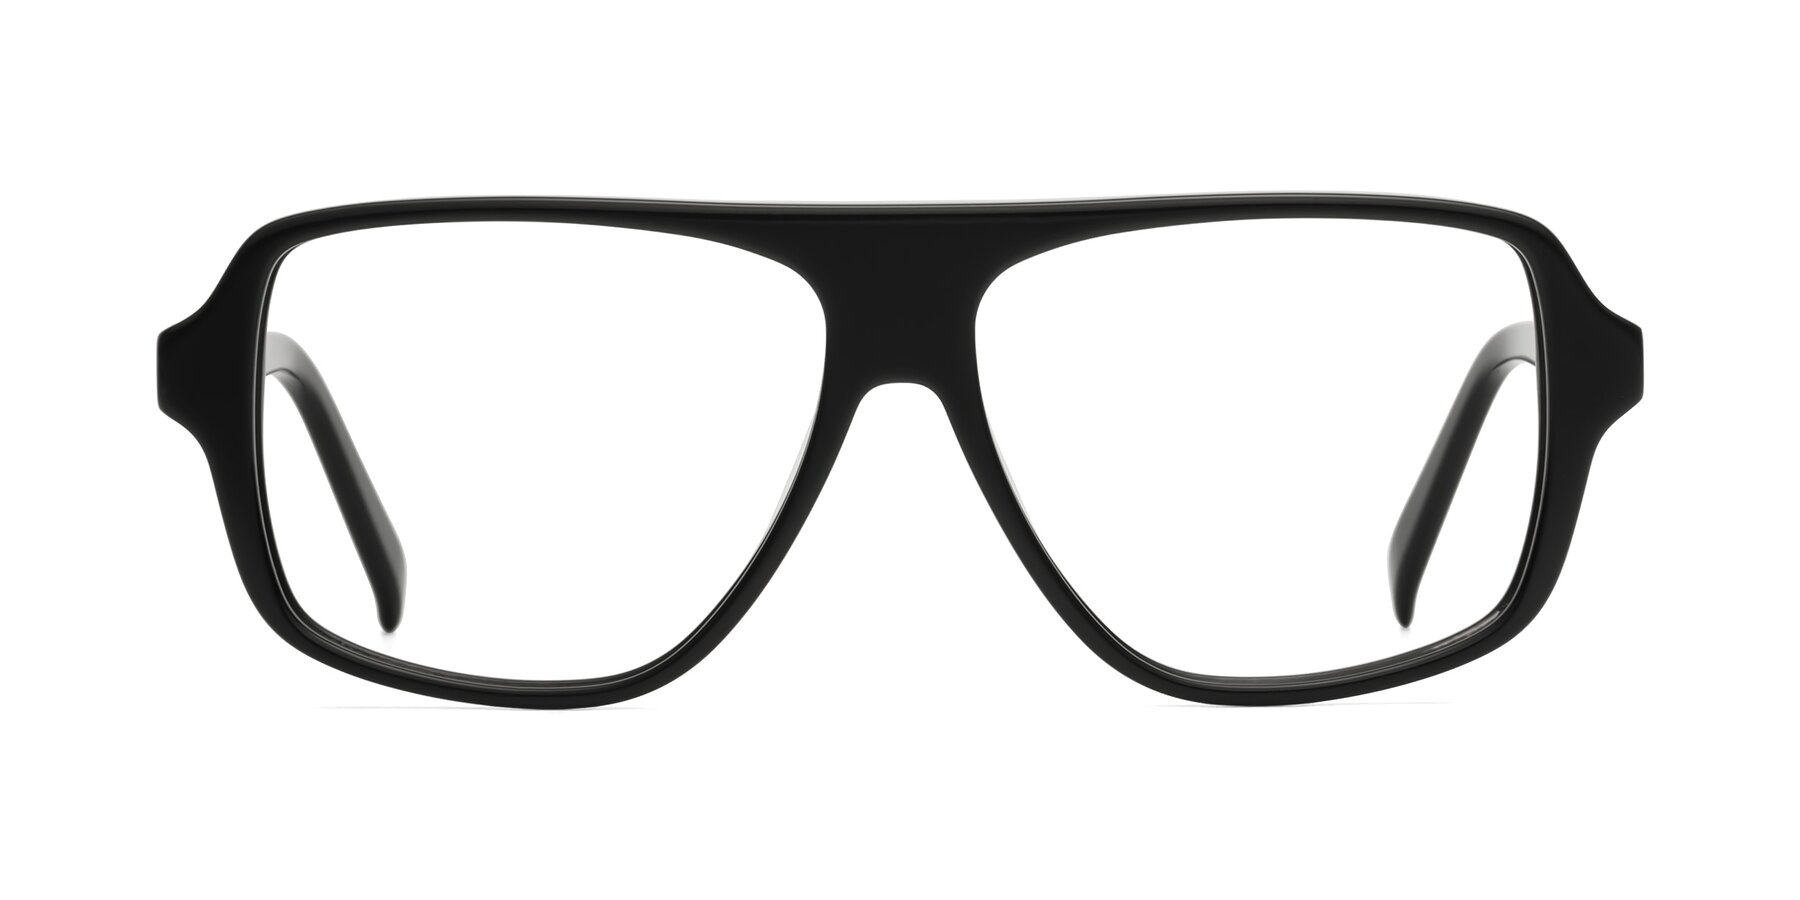 O'Leary - Black Sunglasses Frame